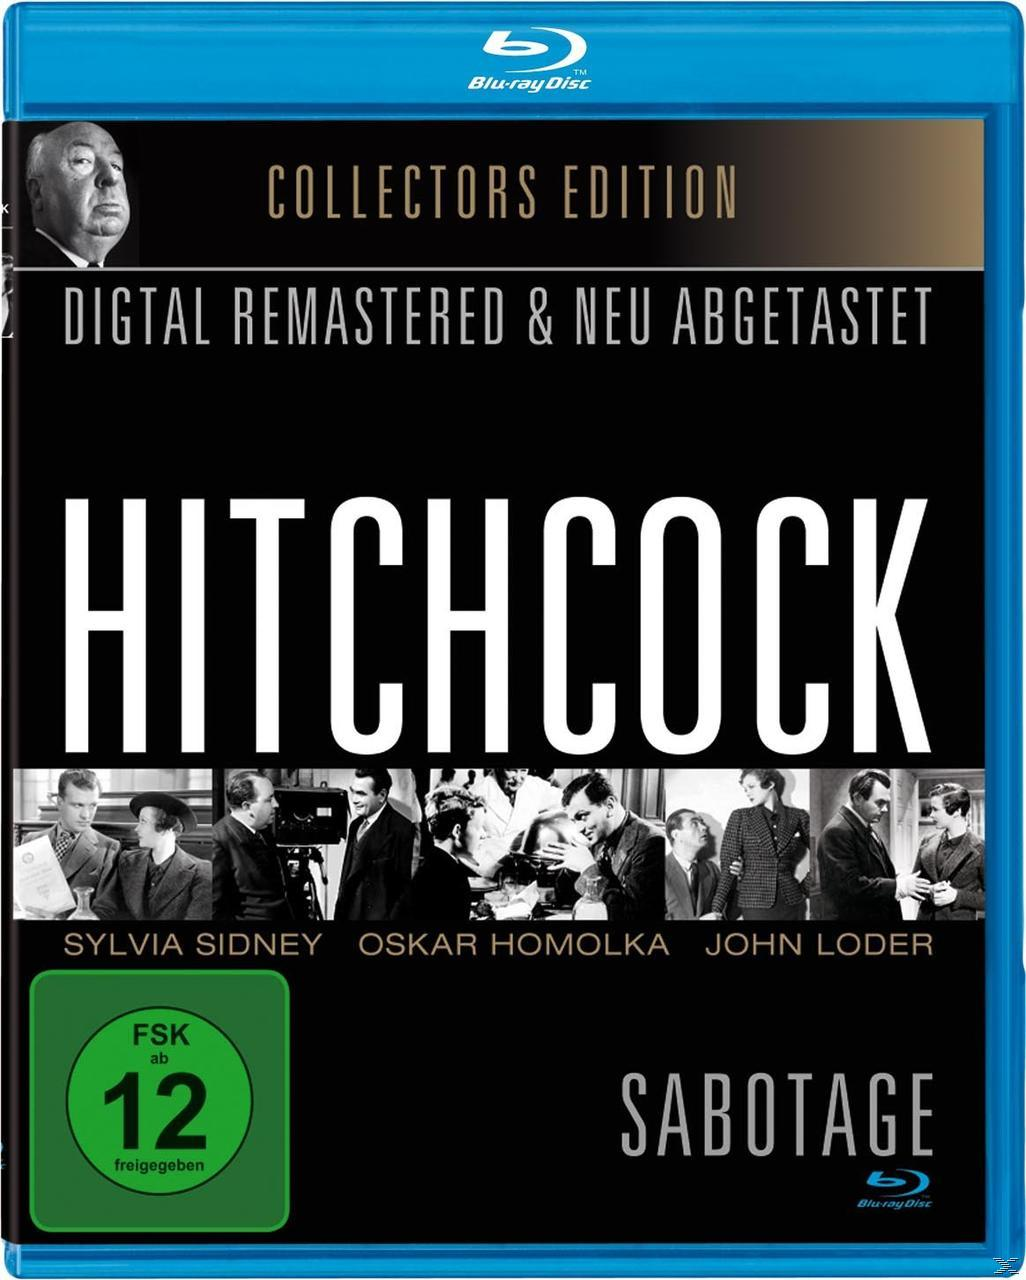 Sabotage Hitchcock: Blu-ray Alfred